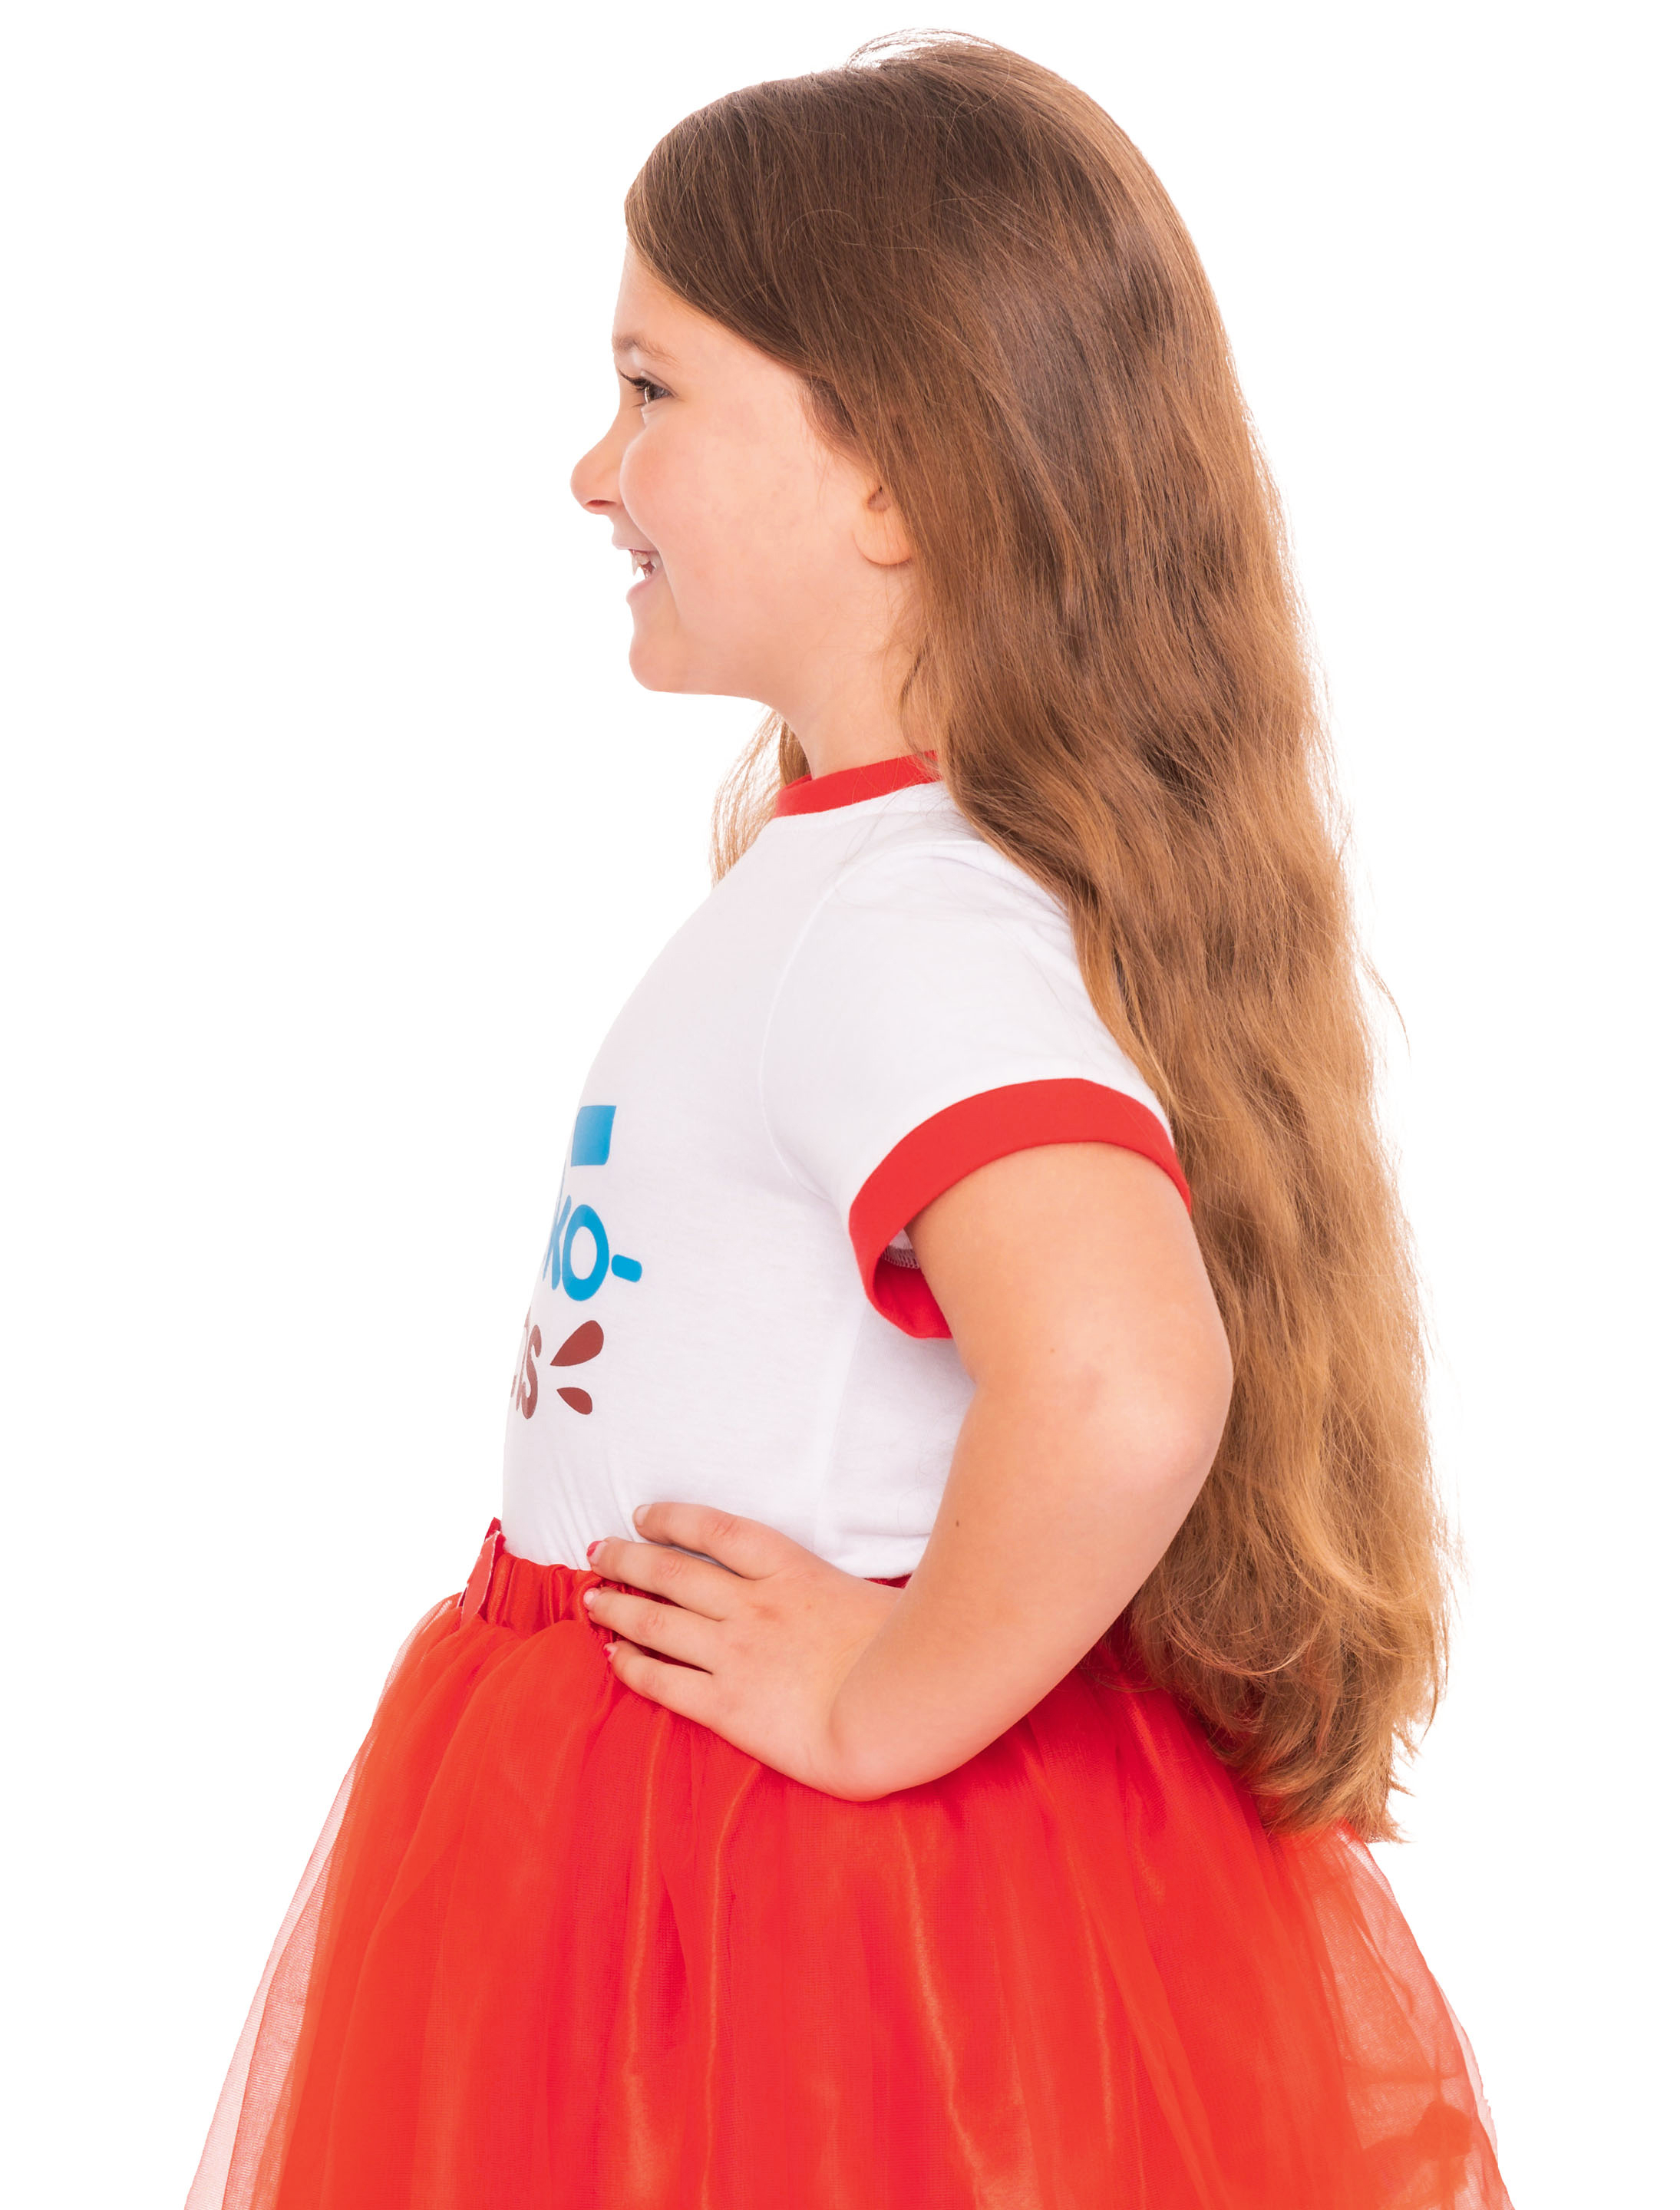 T-Shirt kinder Schoko-Bons Kinder rot/weiß 128-140